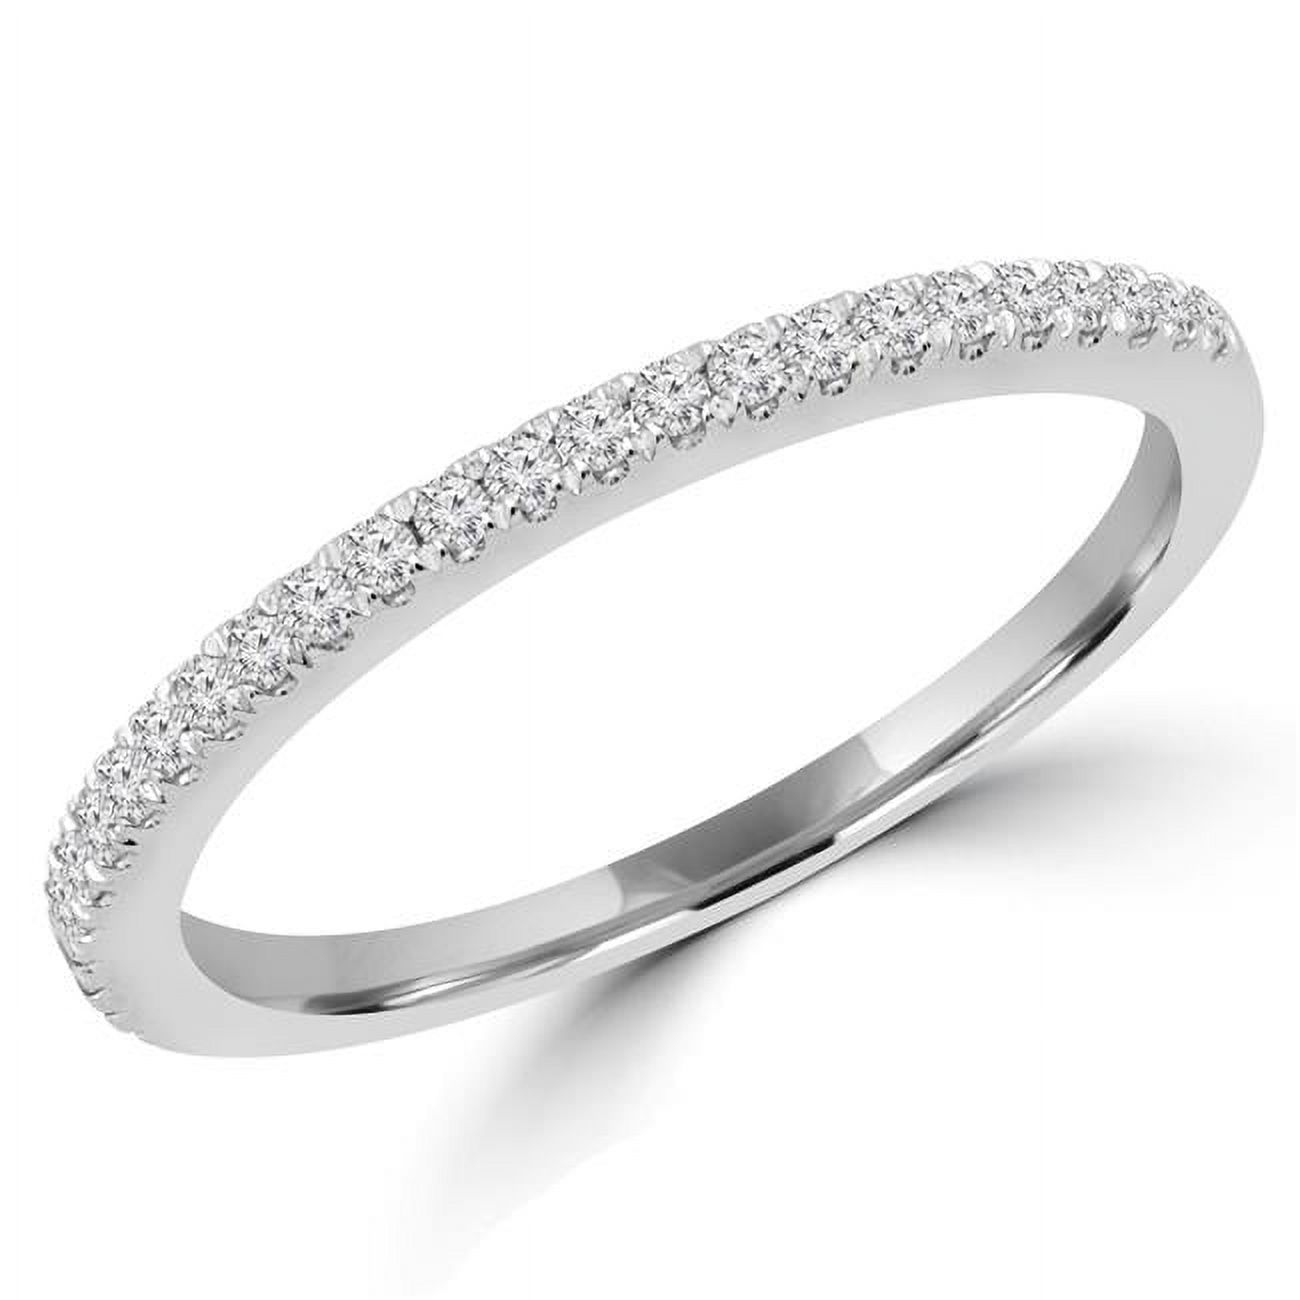 Majesty Diamonds  0.14 CTW Round Diamond Semi-Eternity Wedding Band Ring in 14K White Gold - Size 4 - image 1 of 1